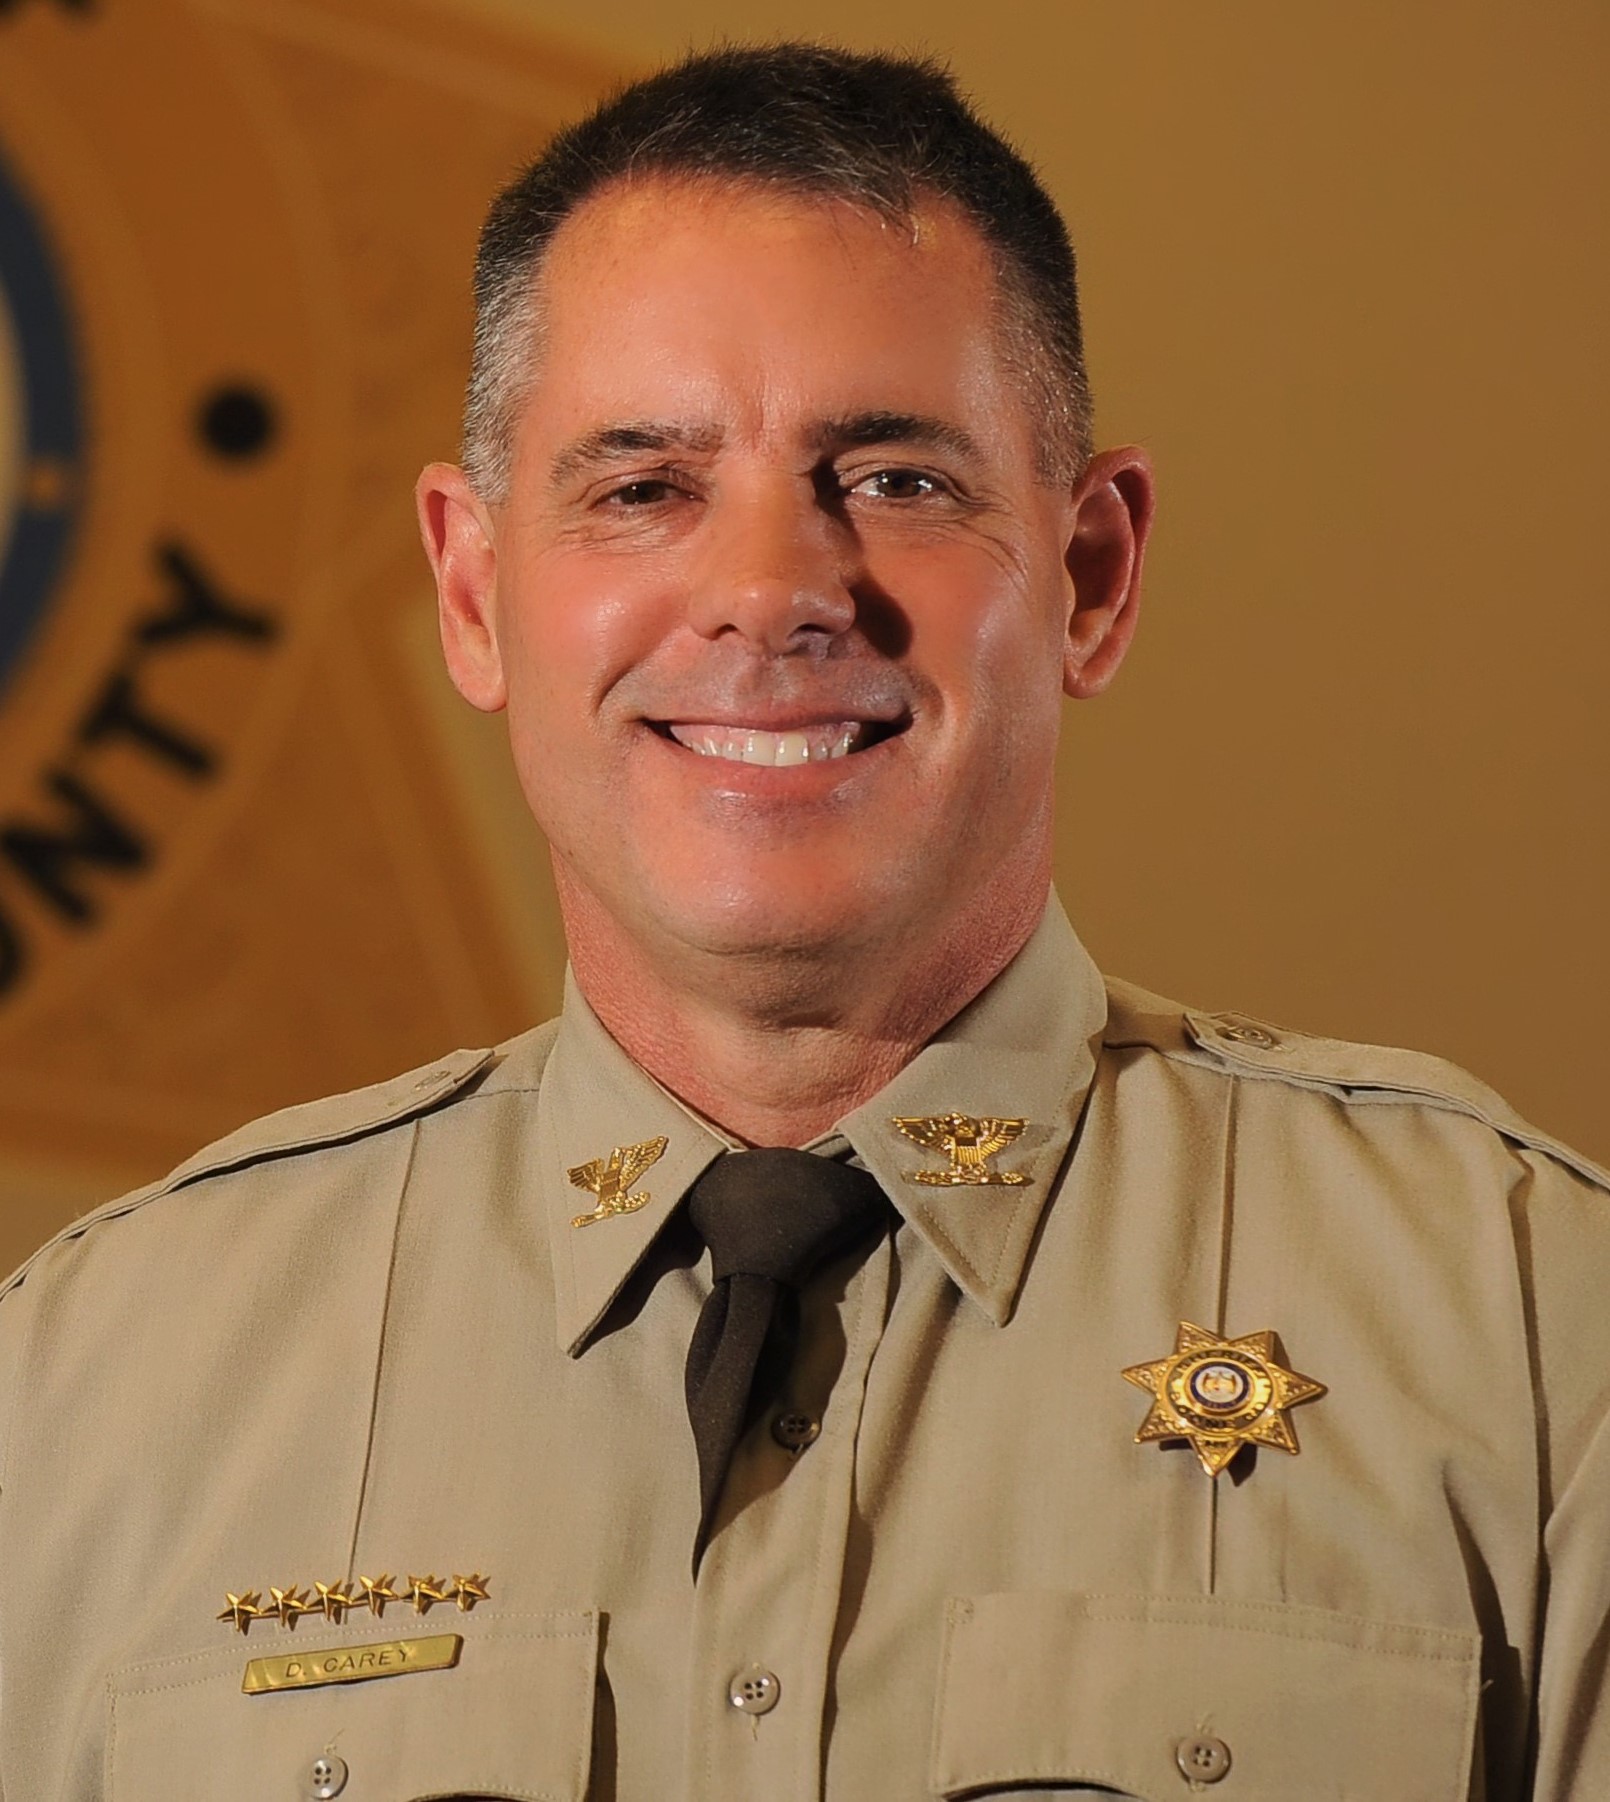 Sheriff Dewayne Carey